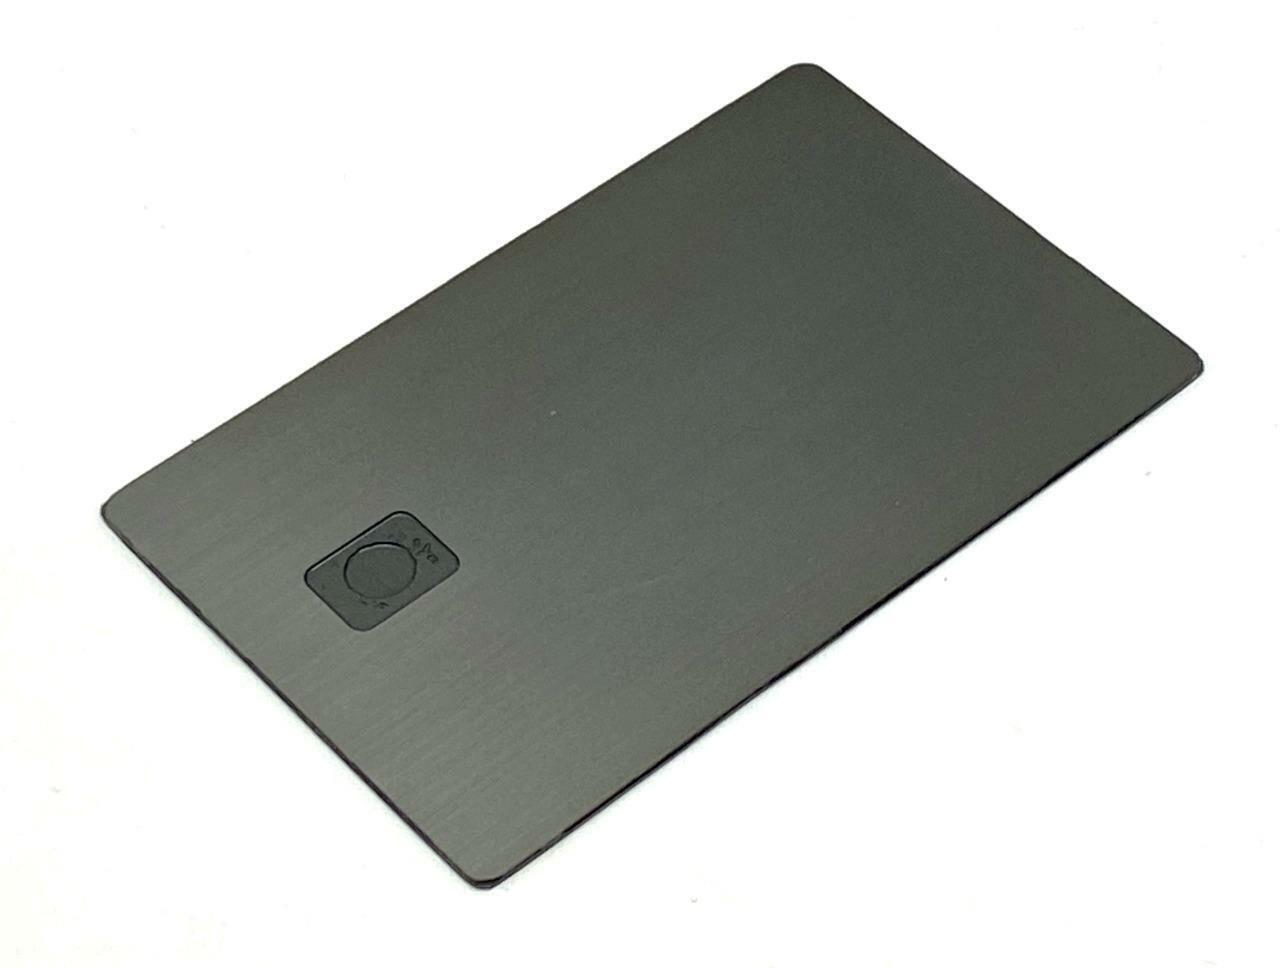 Heavy Metal Stainless Steel Credit Card Blank w/ Chip Slot & Mag Strip Black